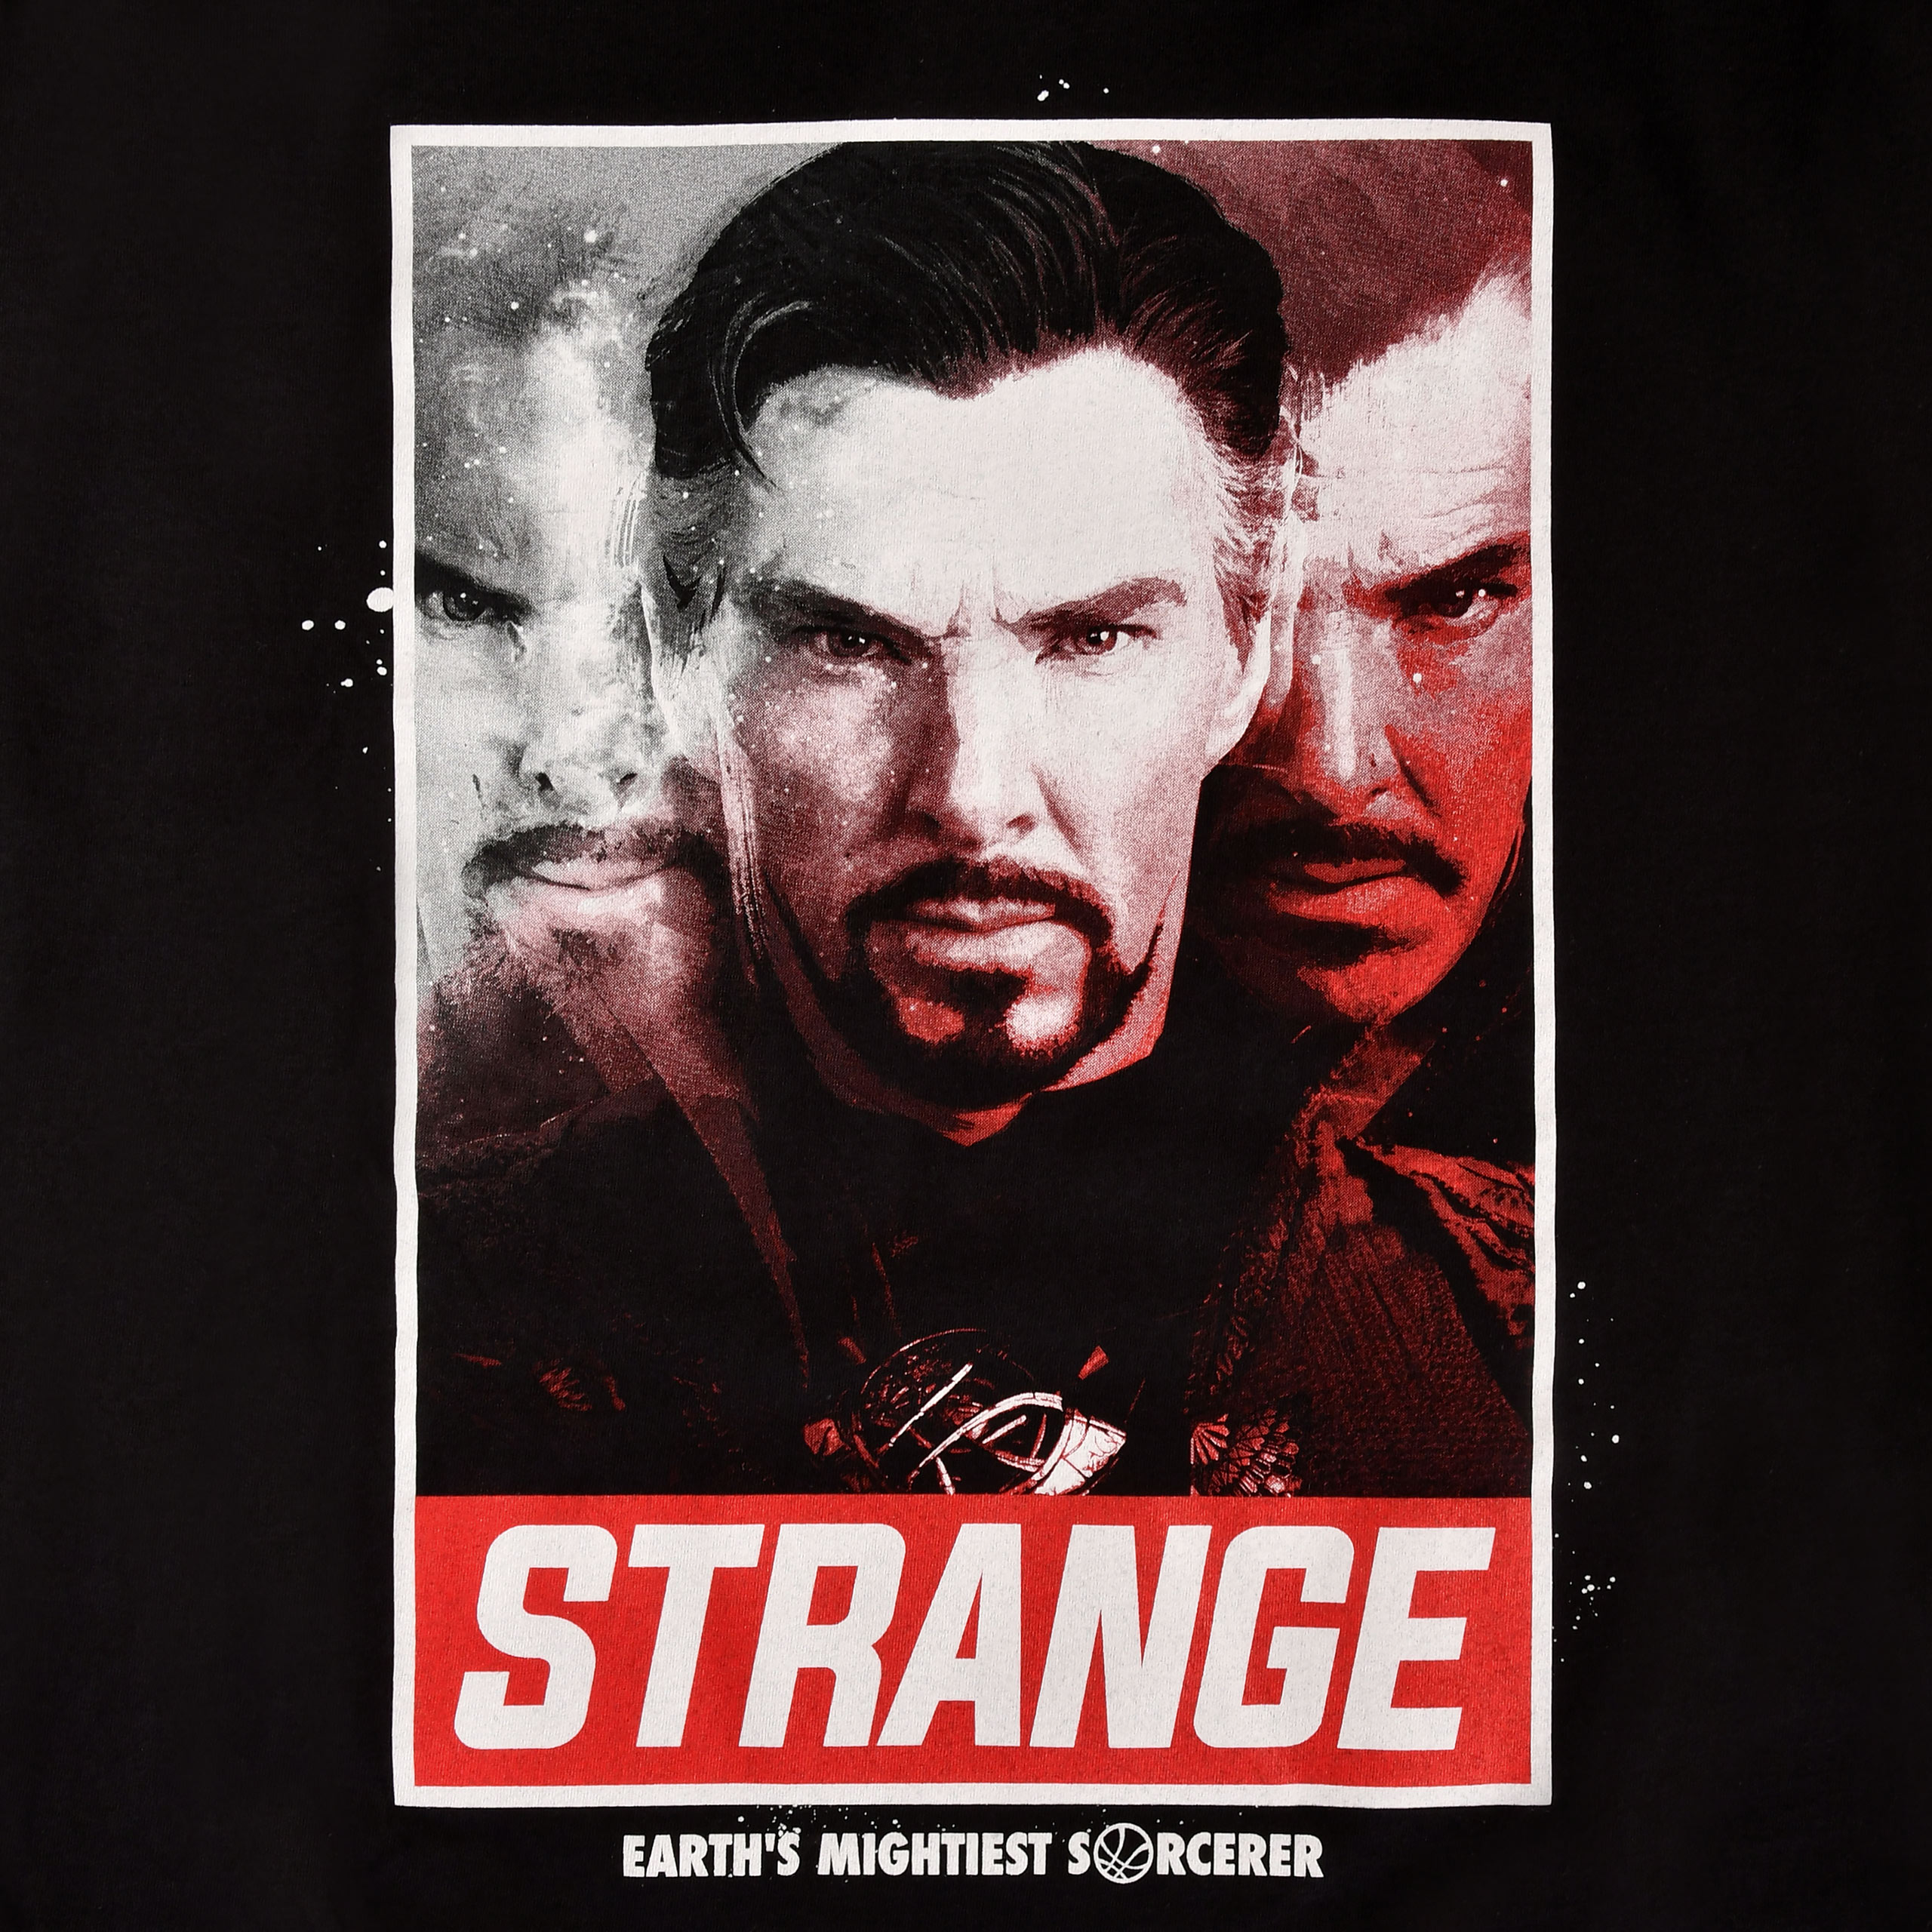 Doctor Strange - Multiverse of Madness Strange T-Shirt schwarz